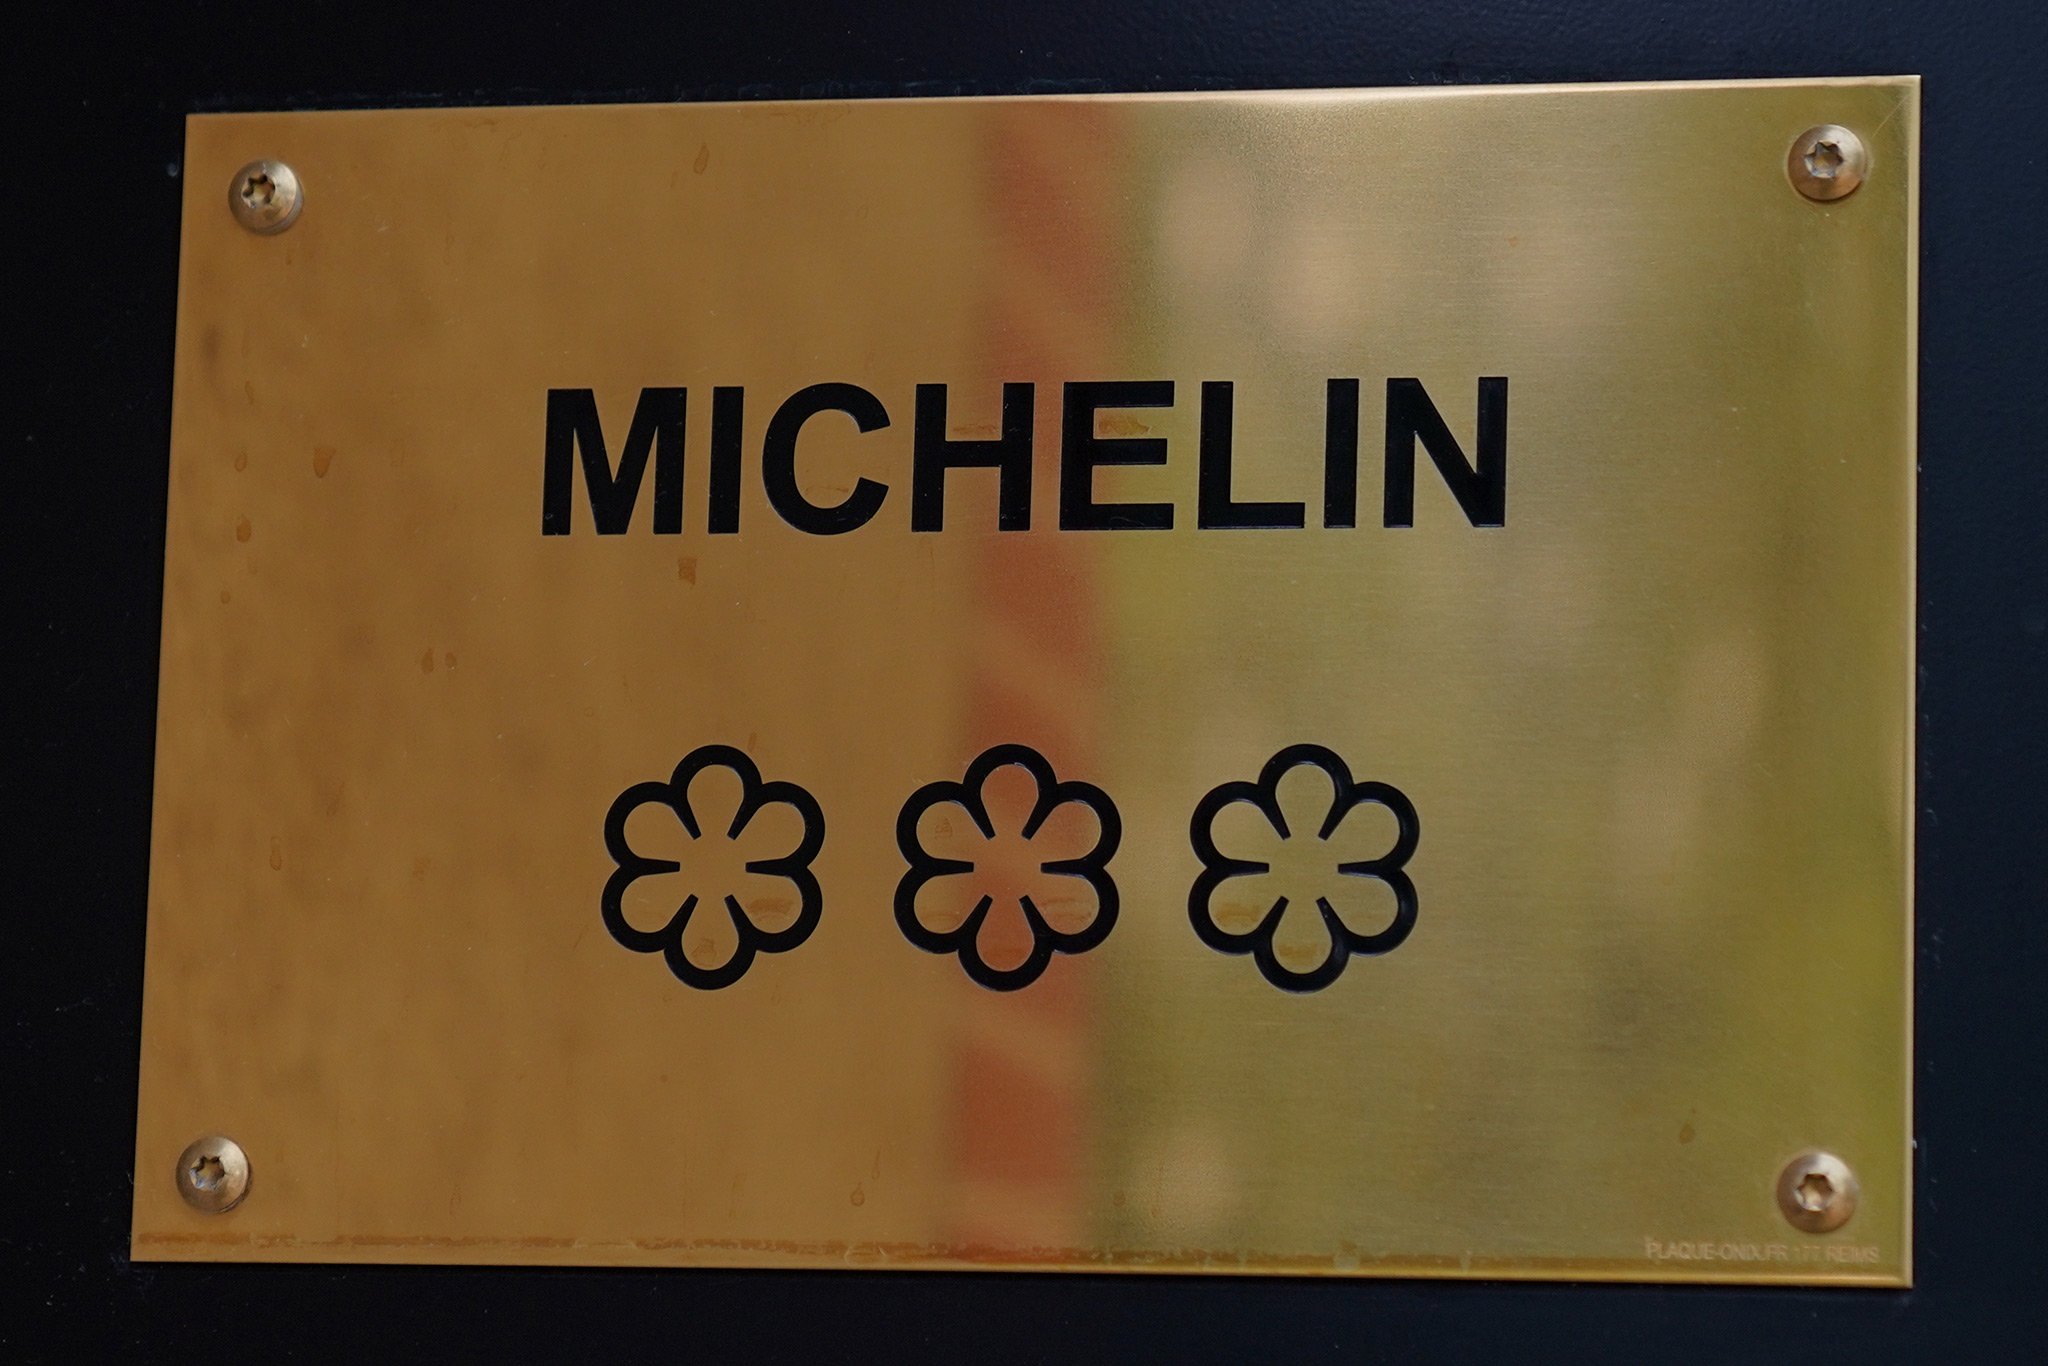 Drei-Sterne-Plaquette des Guide Michelin.